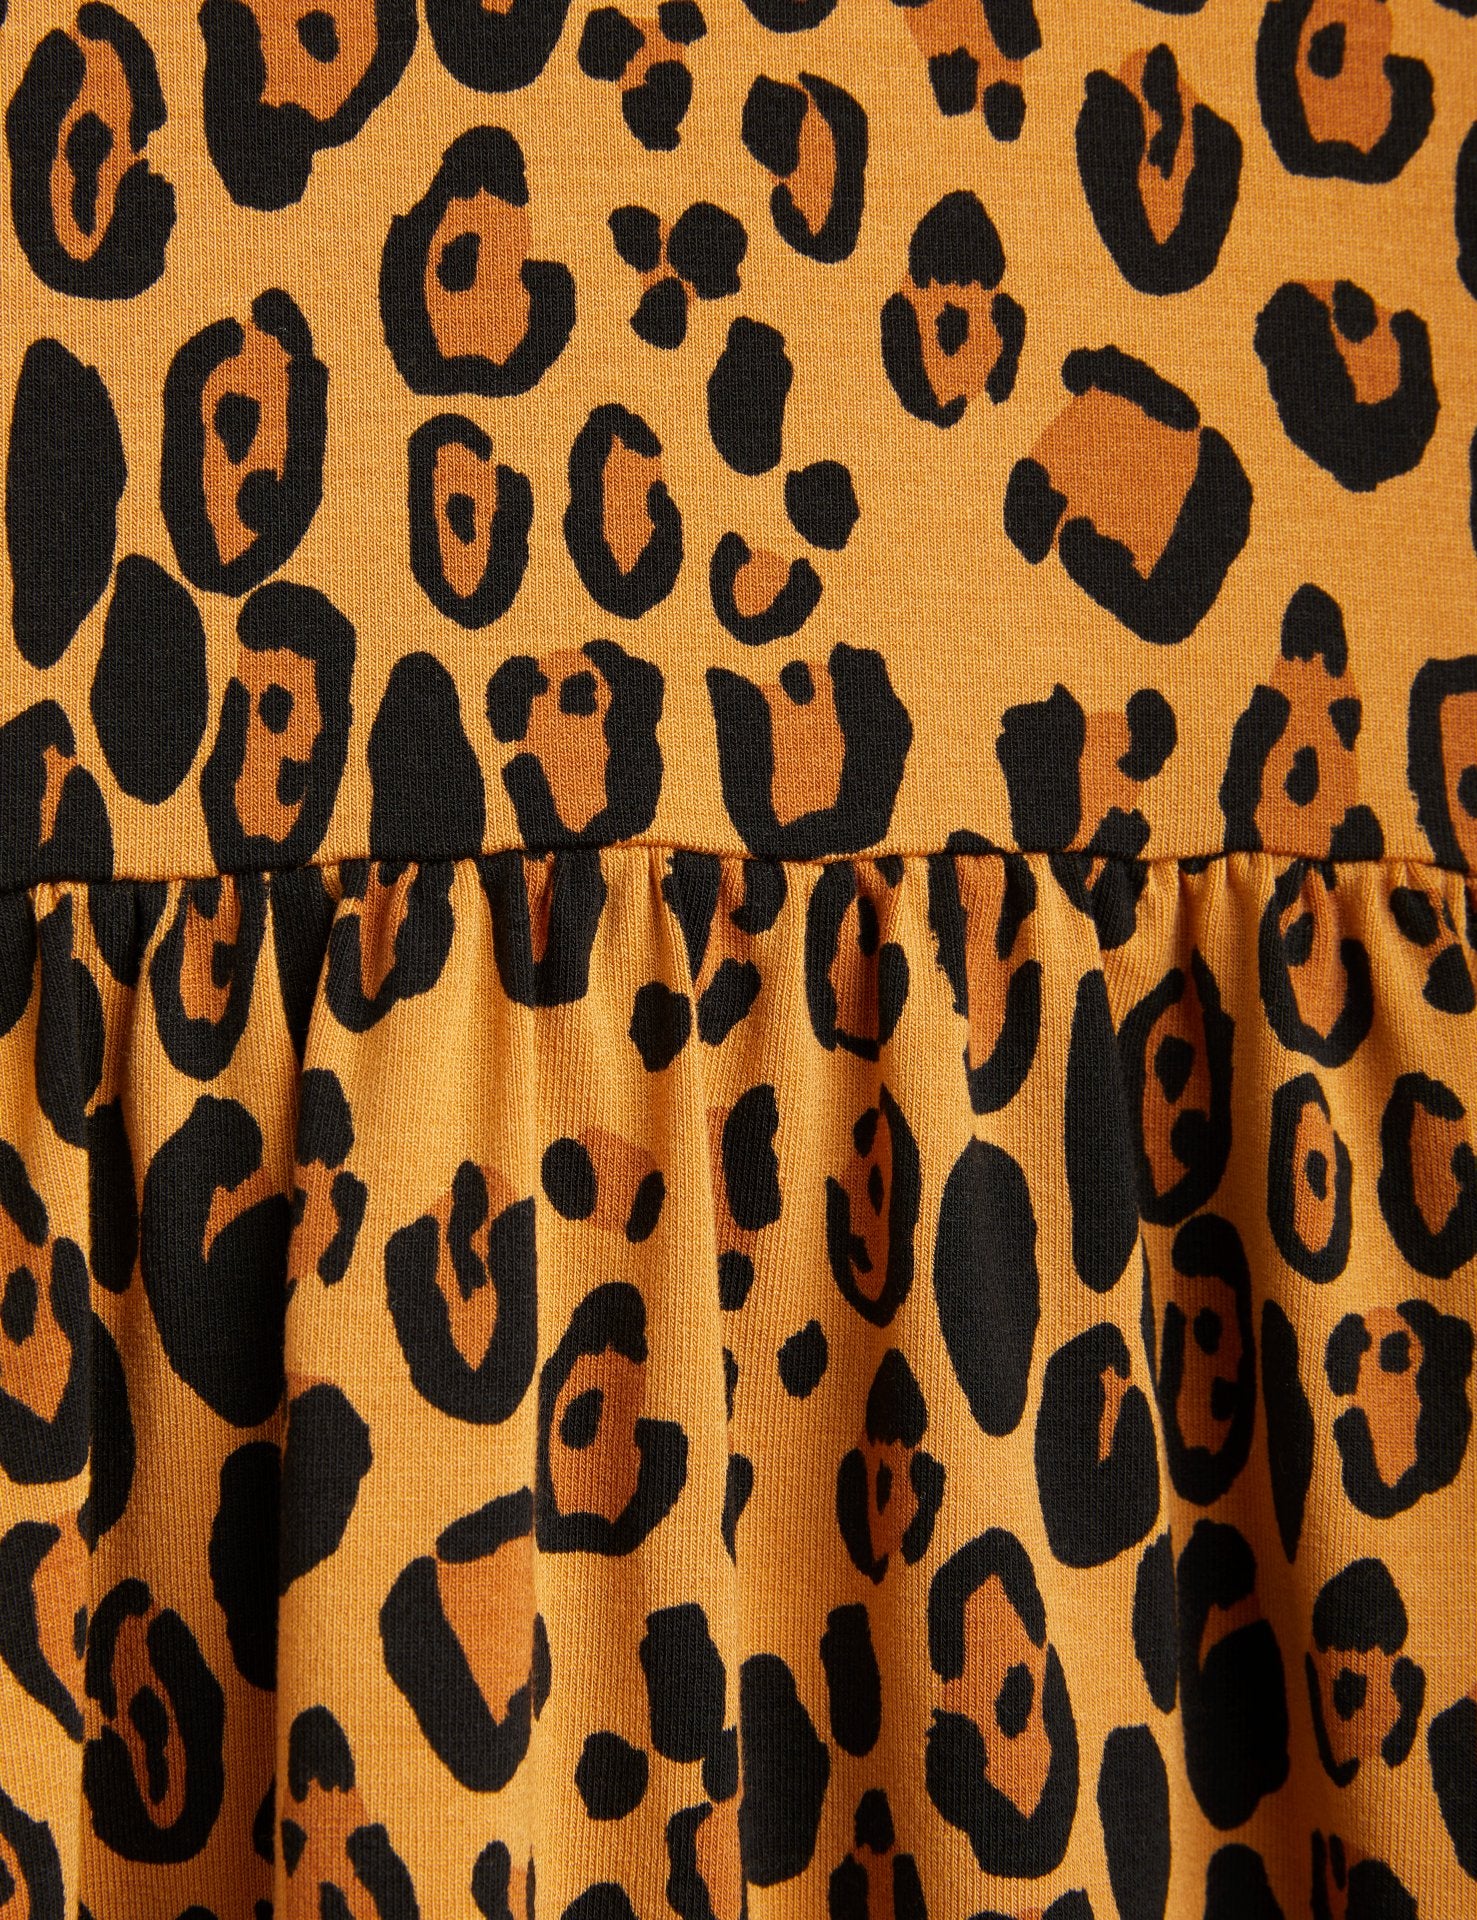 Basic Leopard Dress